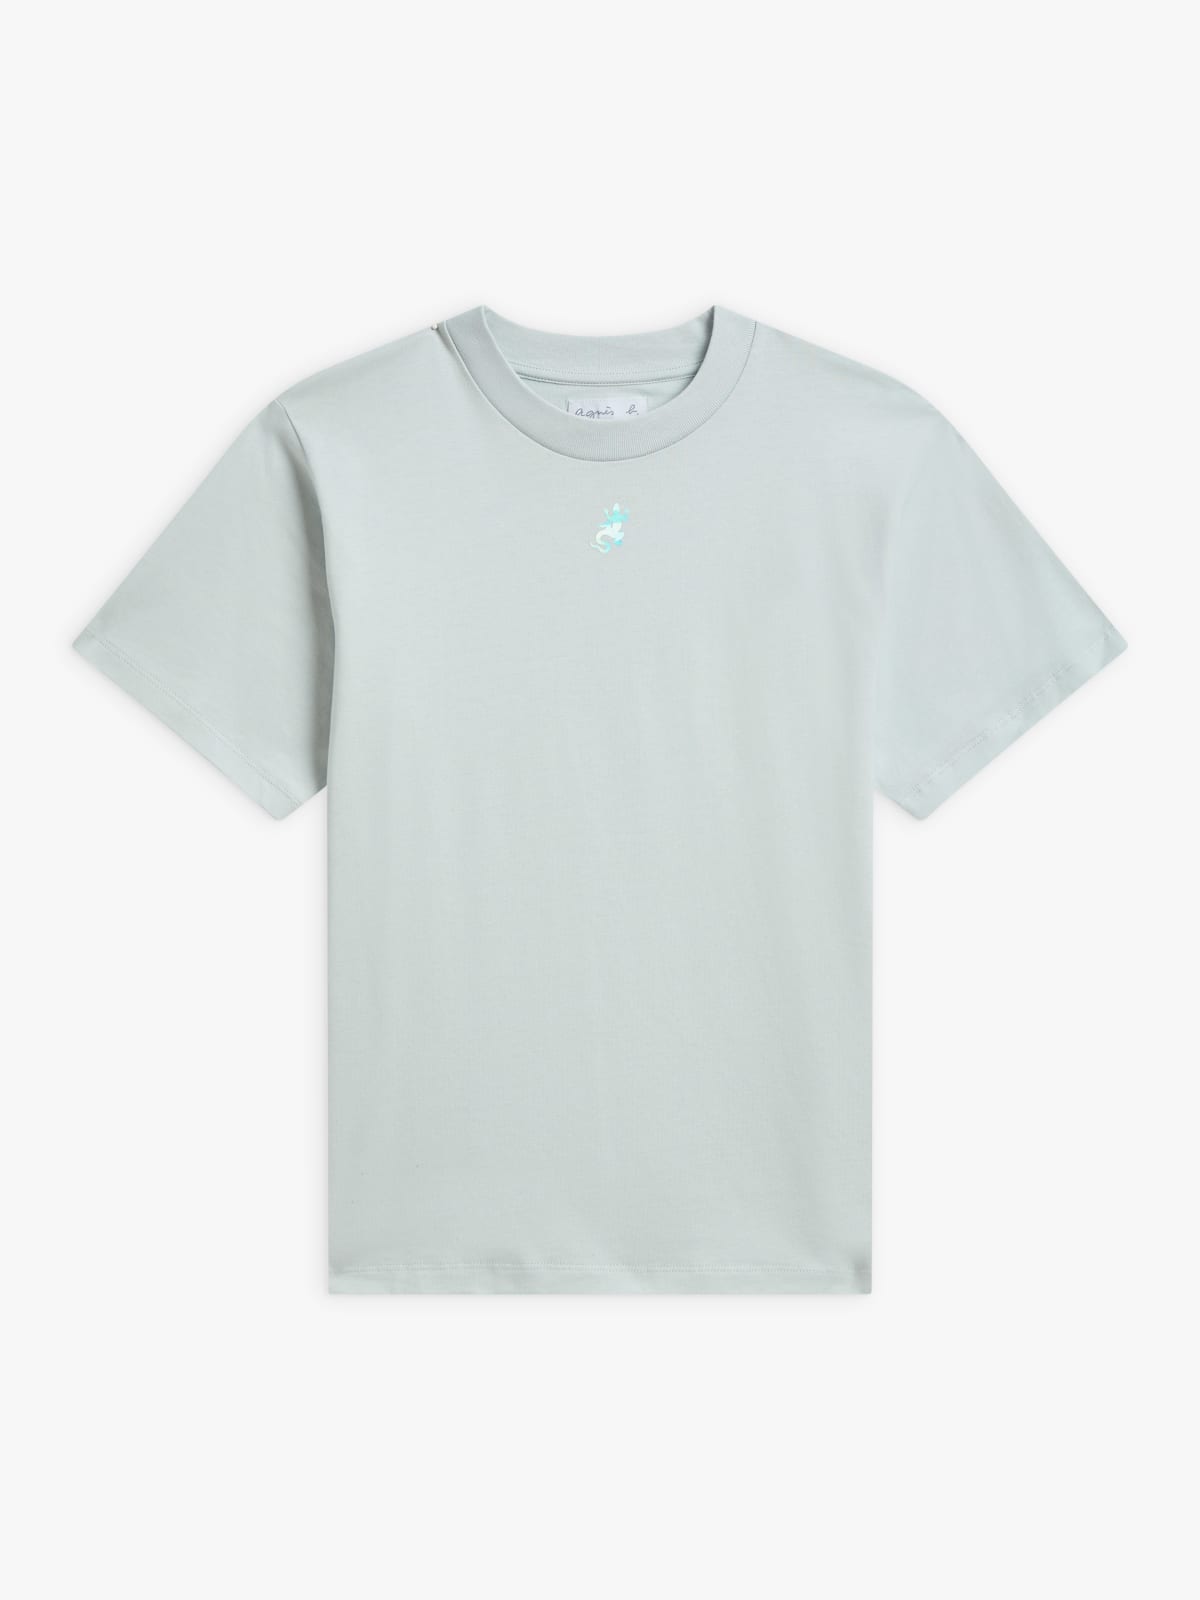 blue cotton "lézard" screen-printed Christof t-shirt